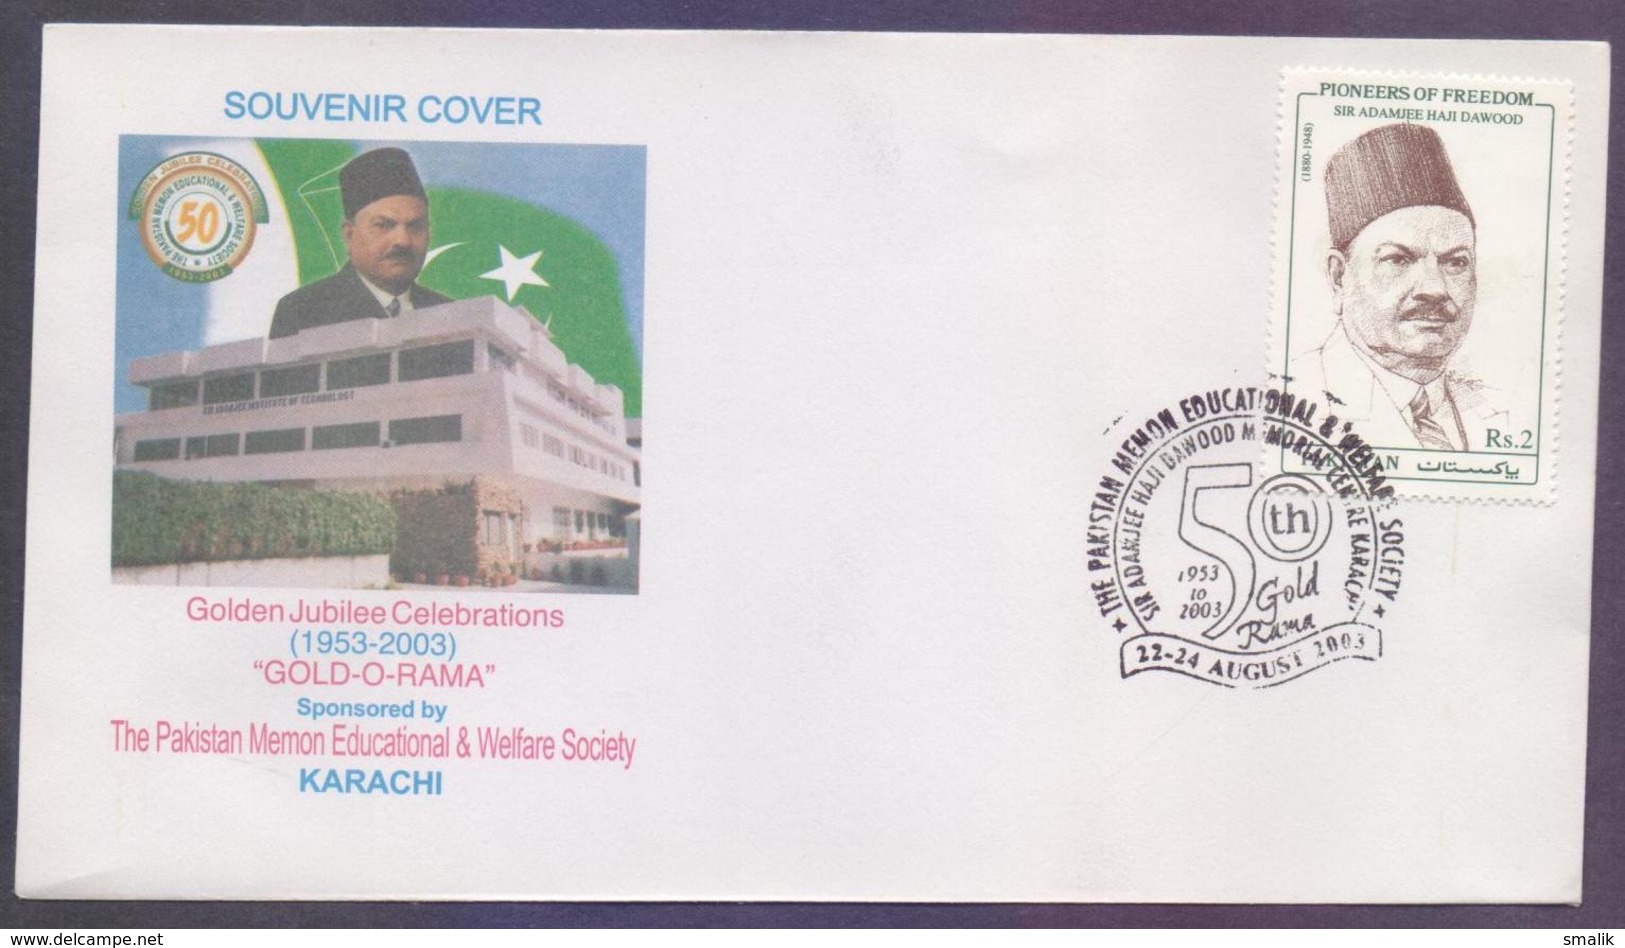 PAKISTAN SPECIAL COVER 2003 - 50th "GOLD-O-RAMA", Memon Educational & Welfare Society, Karachi, Sir Adamjee Dawood - Pakistan